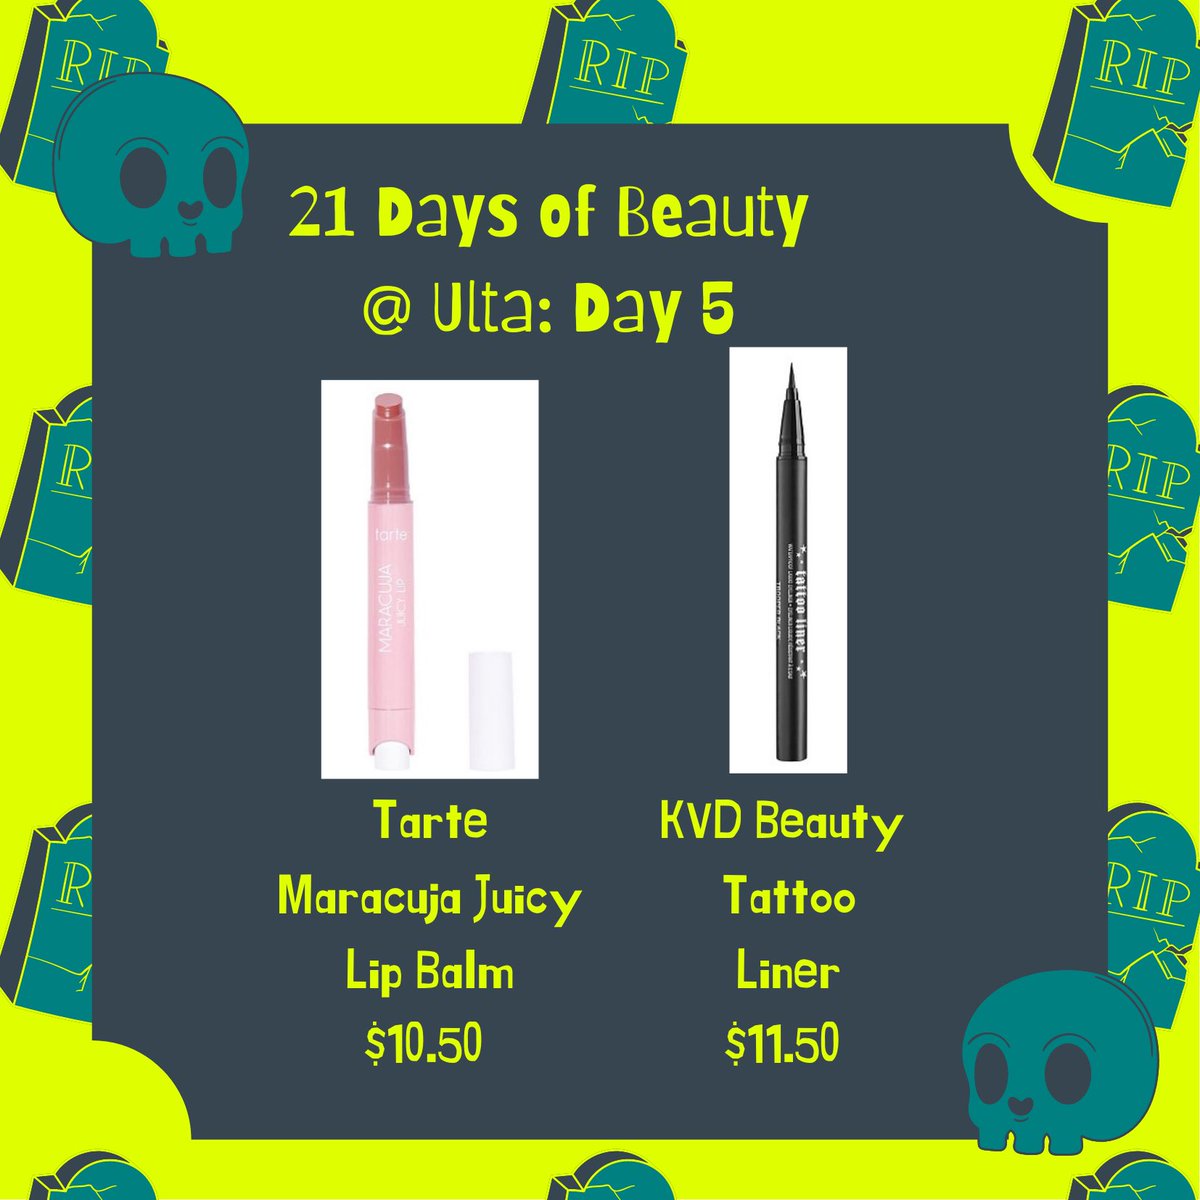 Day 5! Don’t forget to check out Ulta’s website for bonus products on sale!
@ultabeauty @KVDBeauty @tartecosmetics https://t.co/vT7YAxzpgI